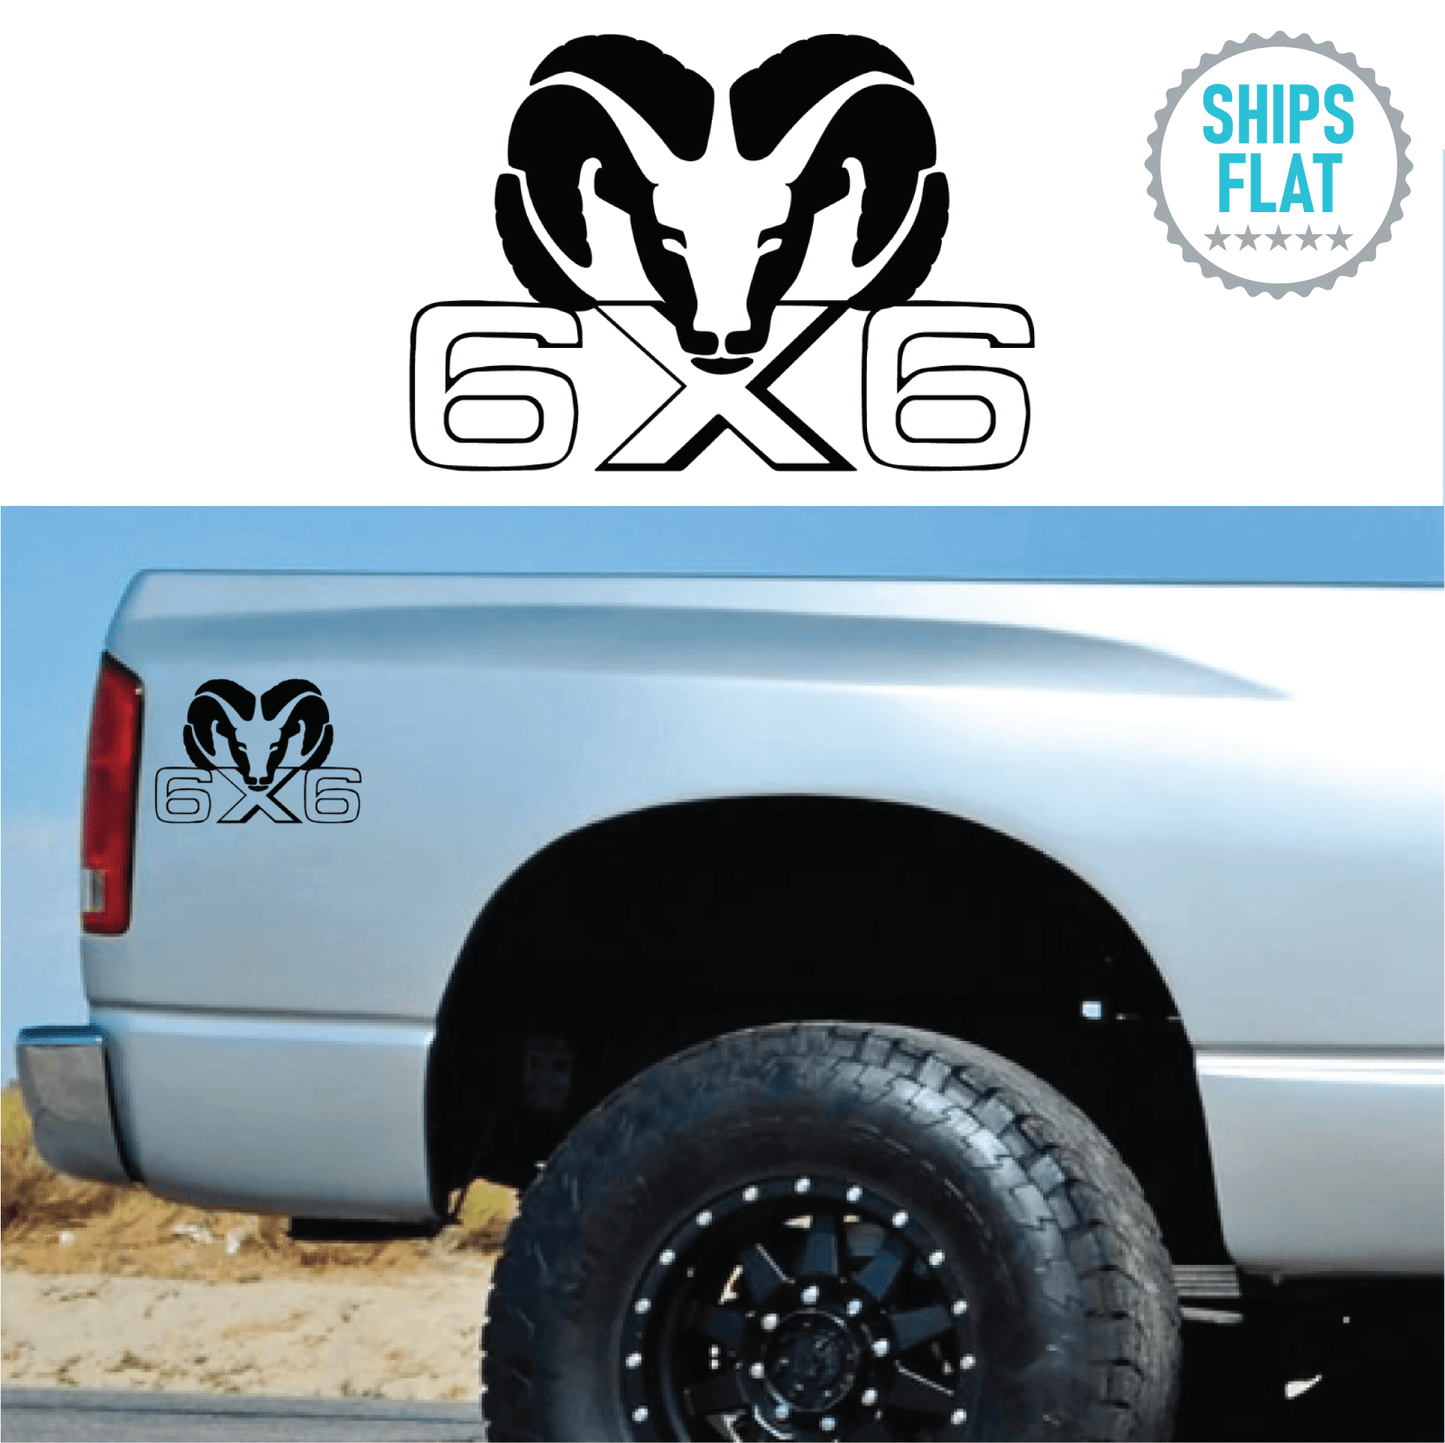 Shop Vinyl Design RAM Trucks 6 x 6 Replacement Bedside Decals #001 Vehicle decal 001 Black Gloss Shop Vinyl Design decals stickers